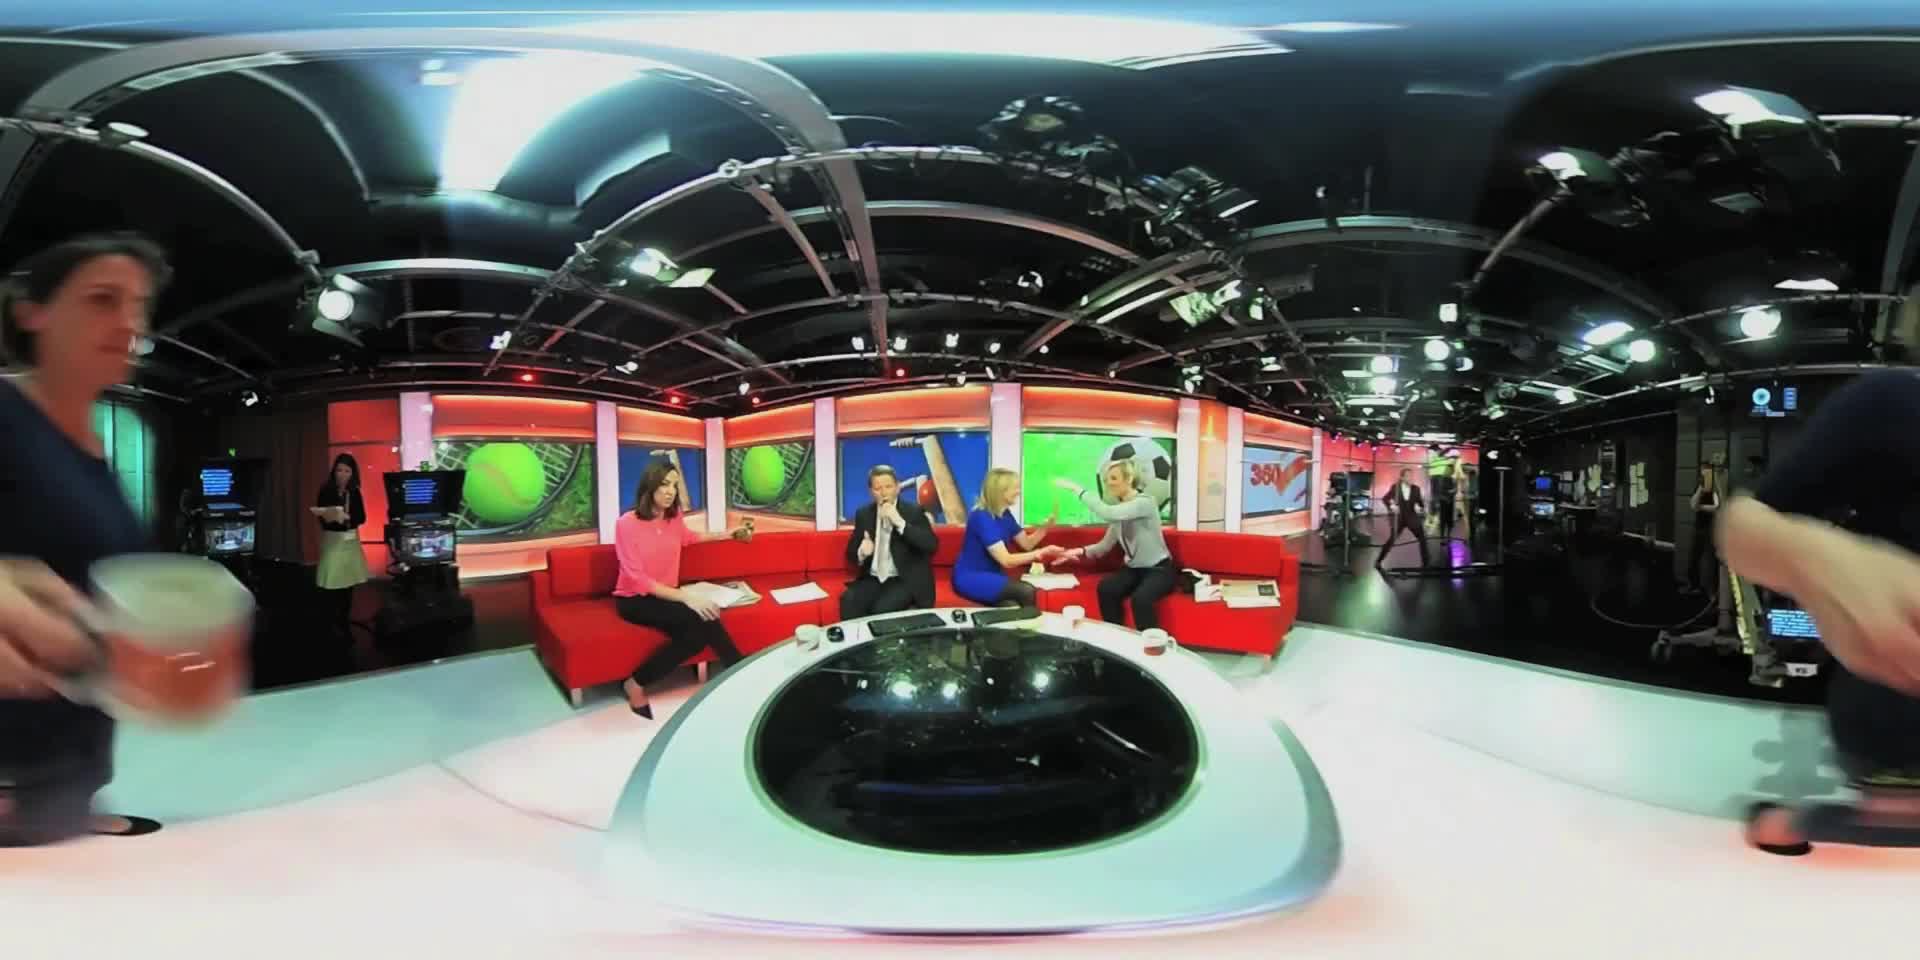 BBC Breakfast - Behind the scenes (VR360 video) - BBC News